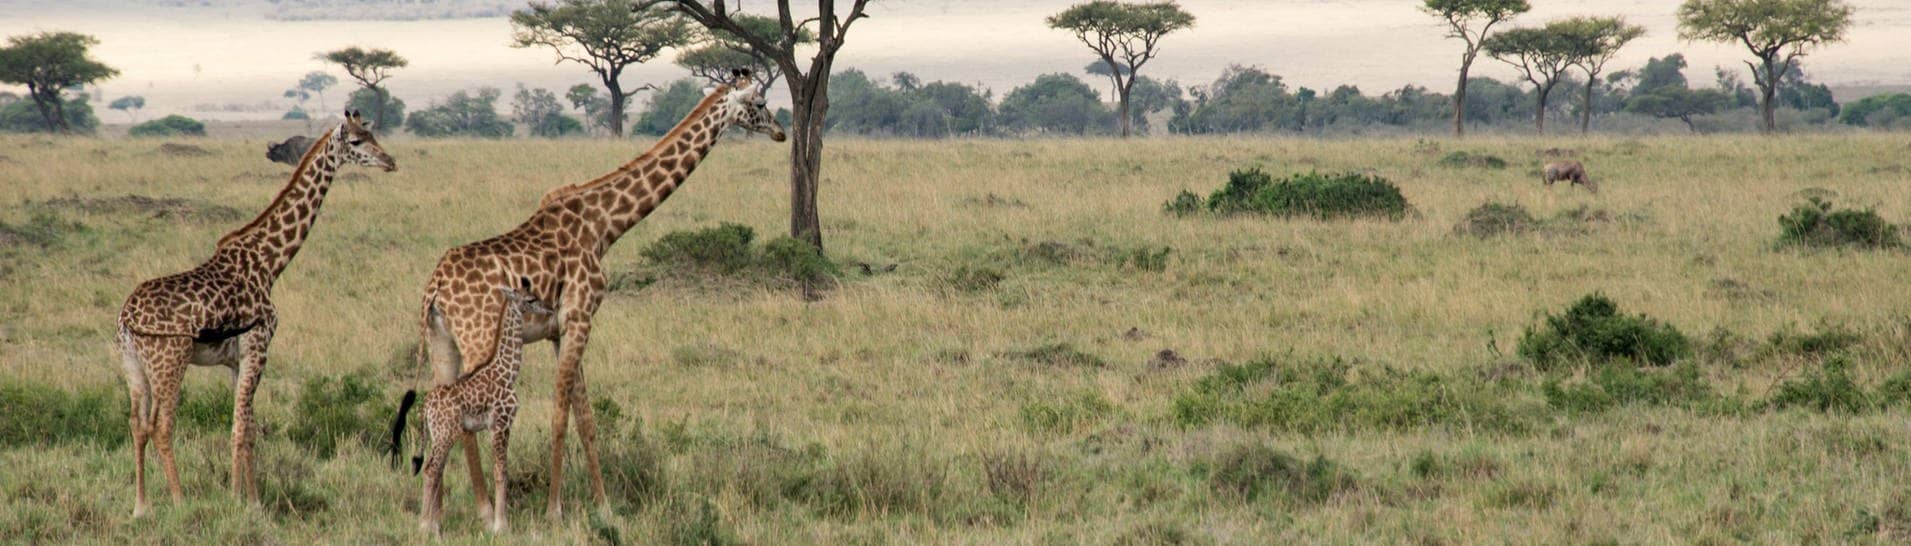 Giraffen in einem Nationalpark in Afrika (Foto: dpa Bildfunk, picture alliance/dpa | Gioia Forster)